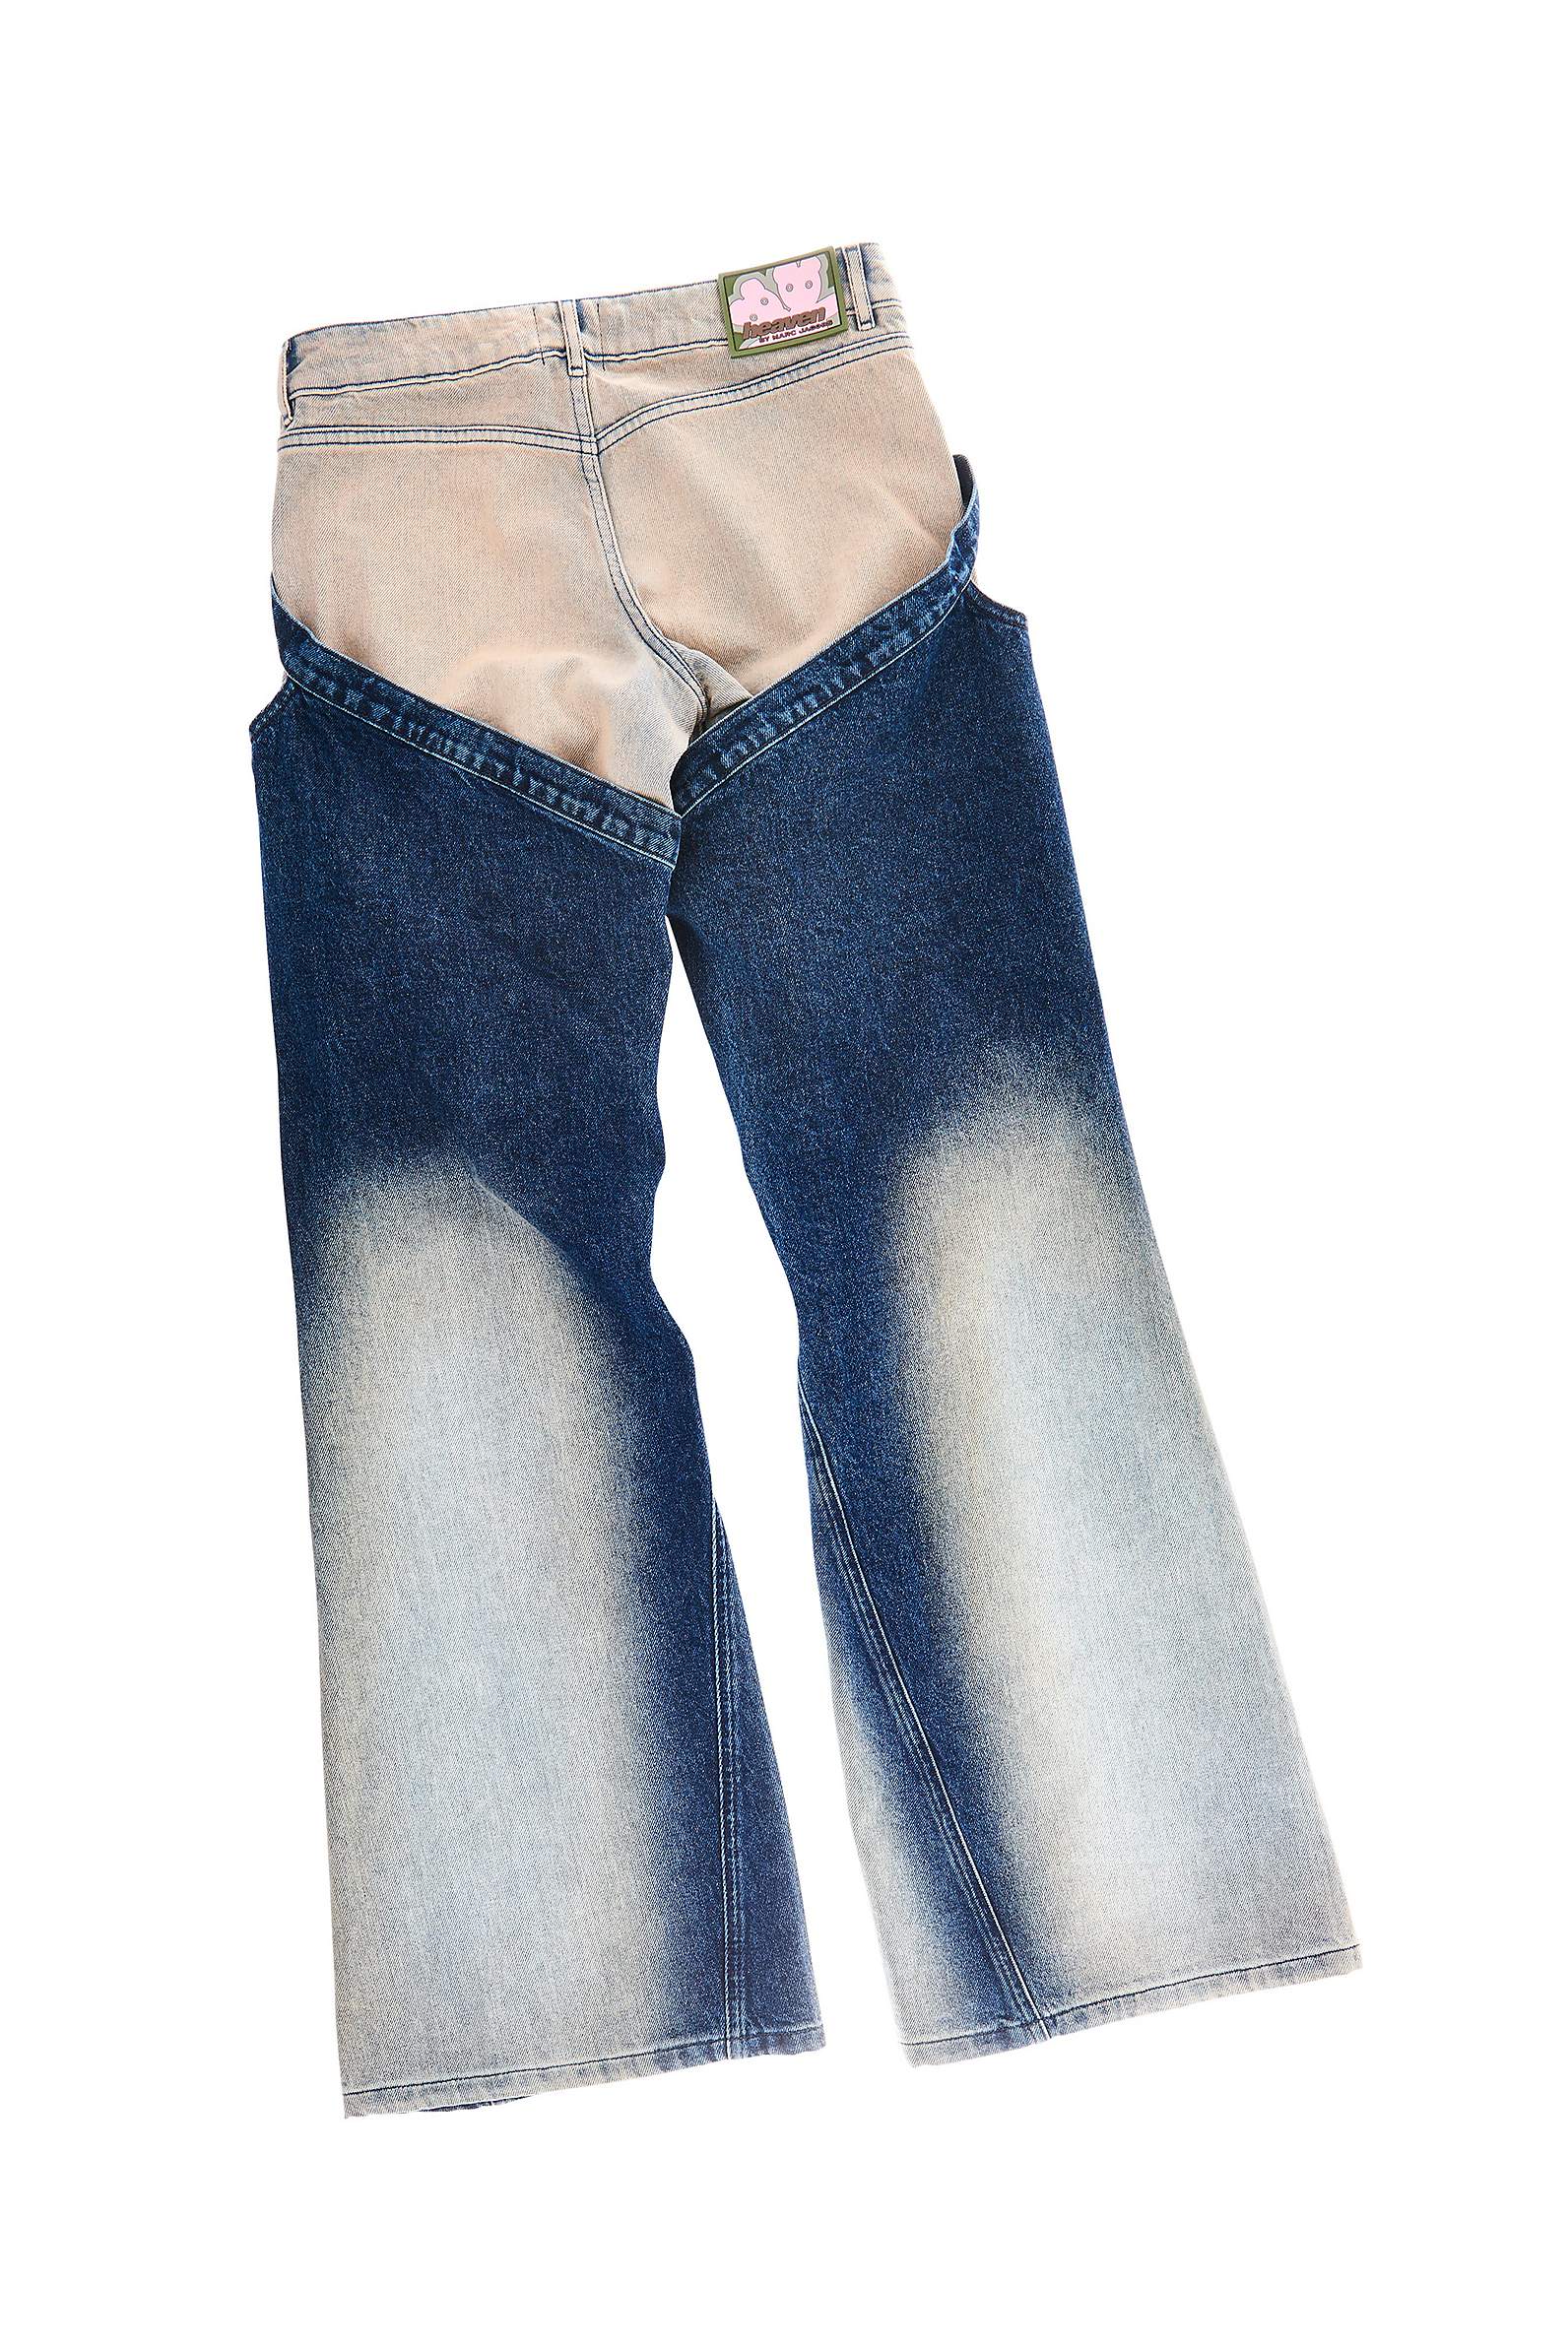 Chap Washed Pants | Marc Jacobs Heaven